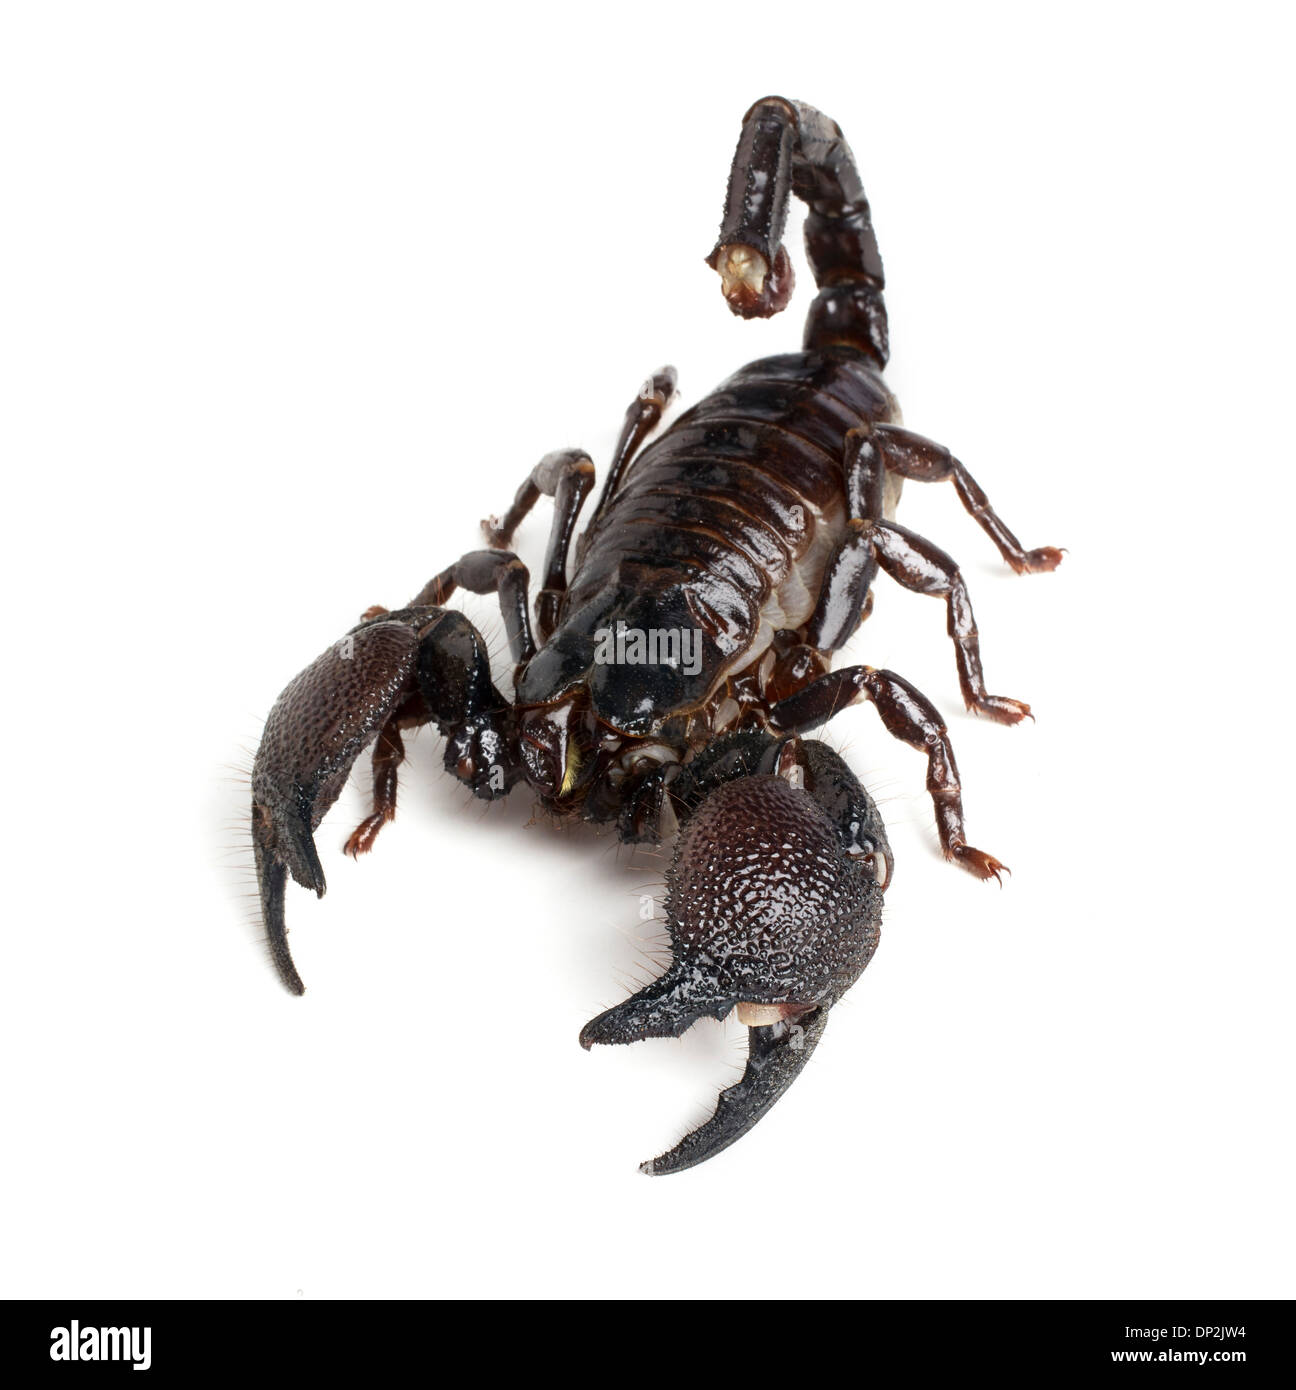 L'imperatore scorpion Foto Stock